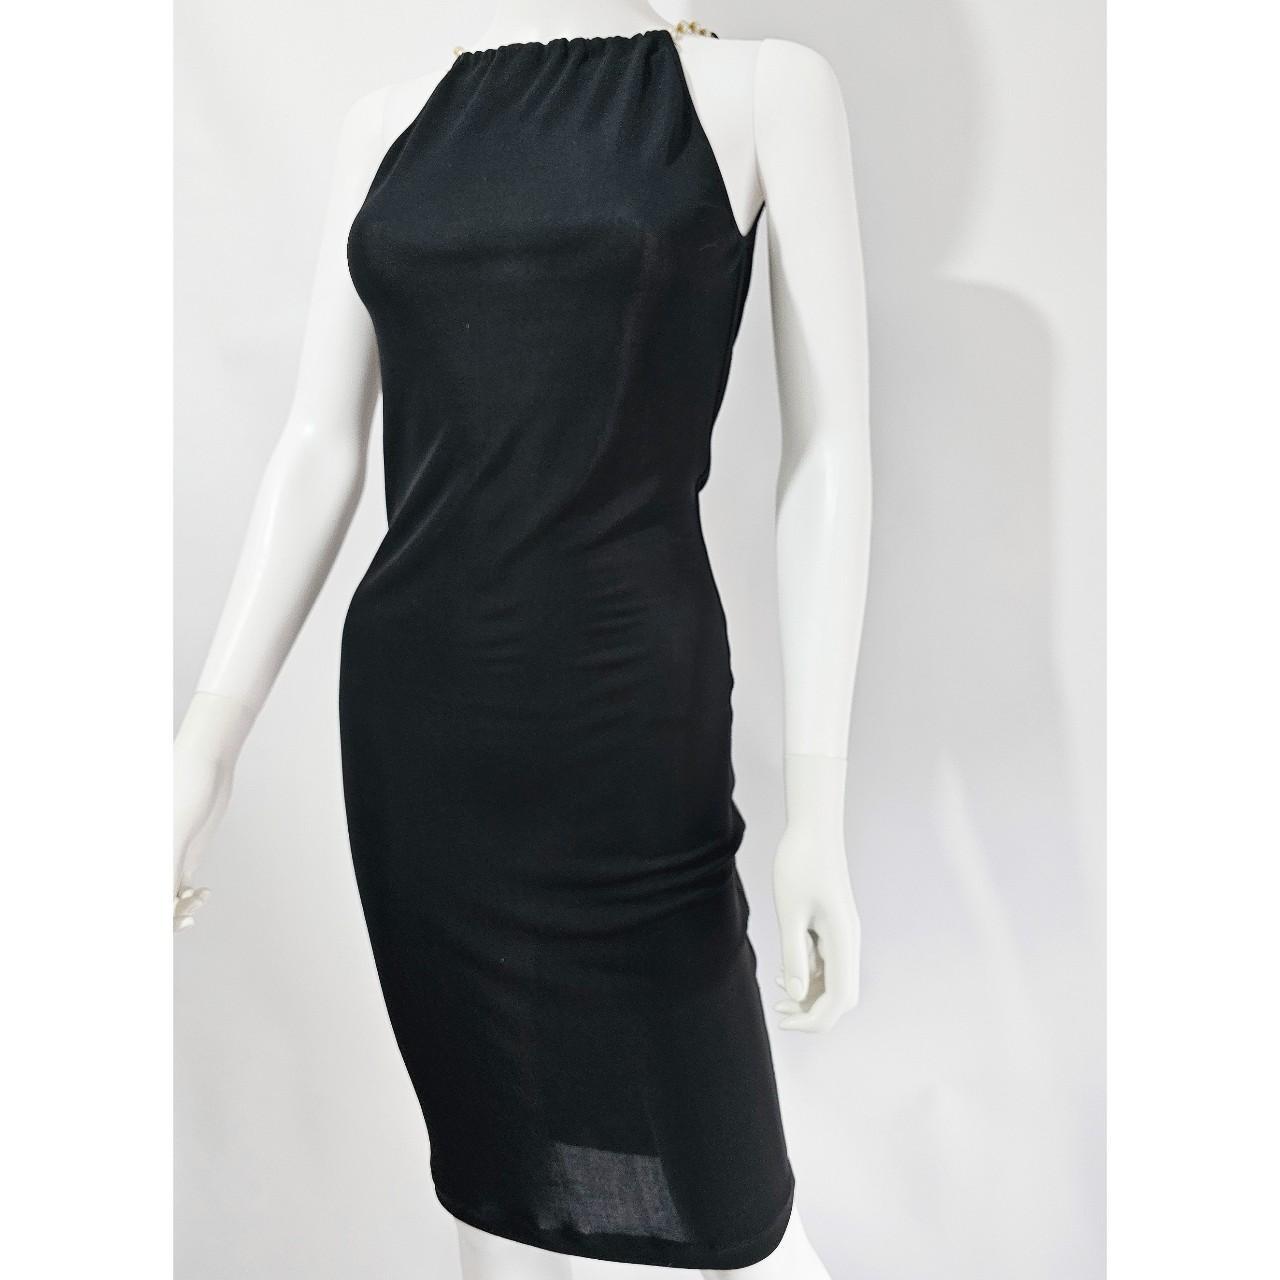 Dolce & Gabbana Women's Black and Silver Dress - 3